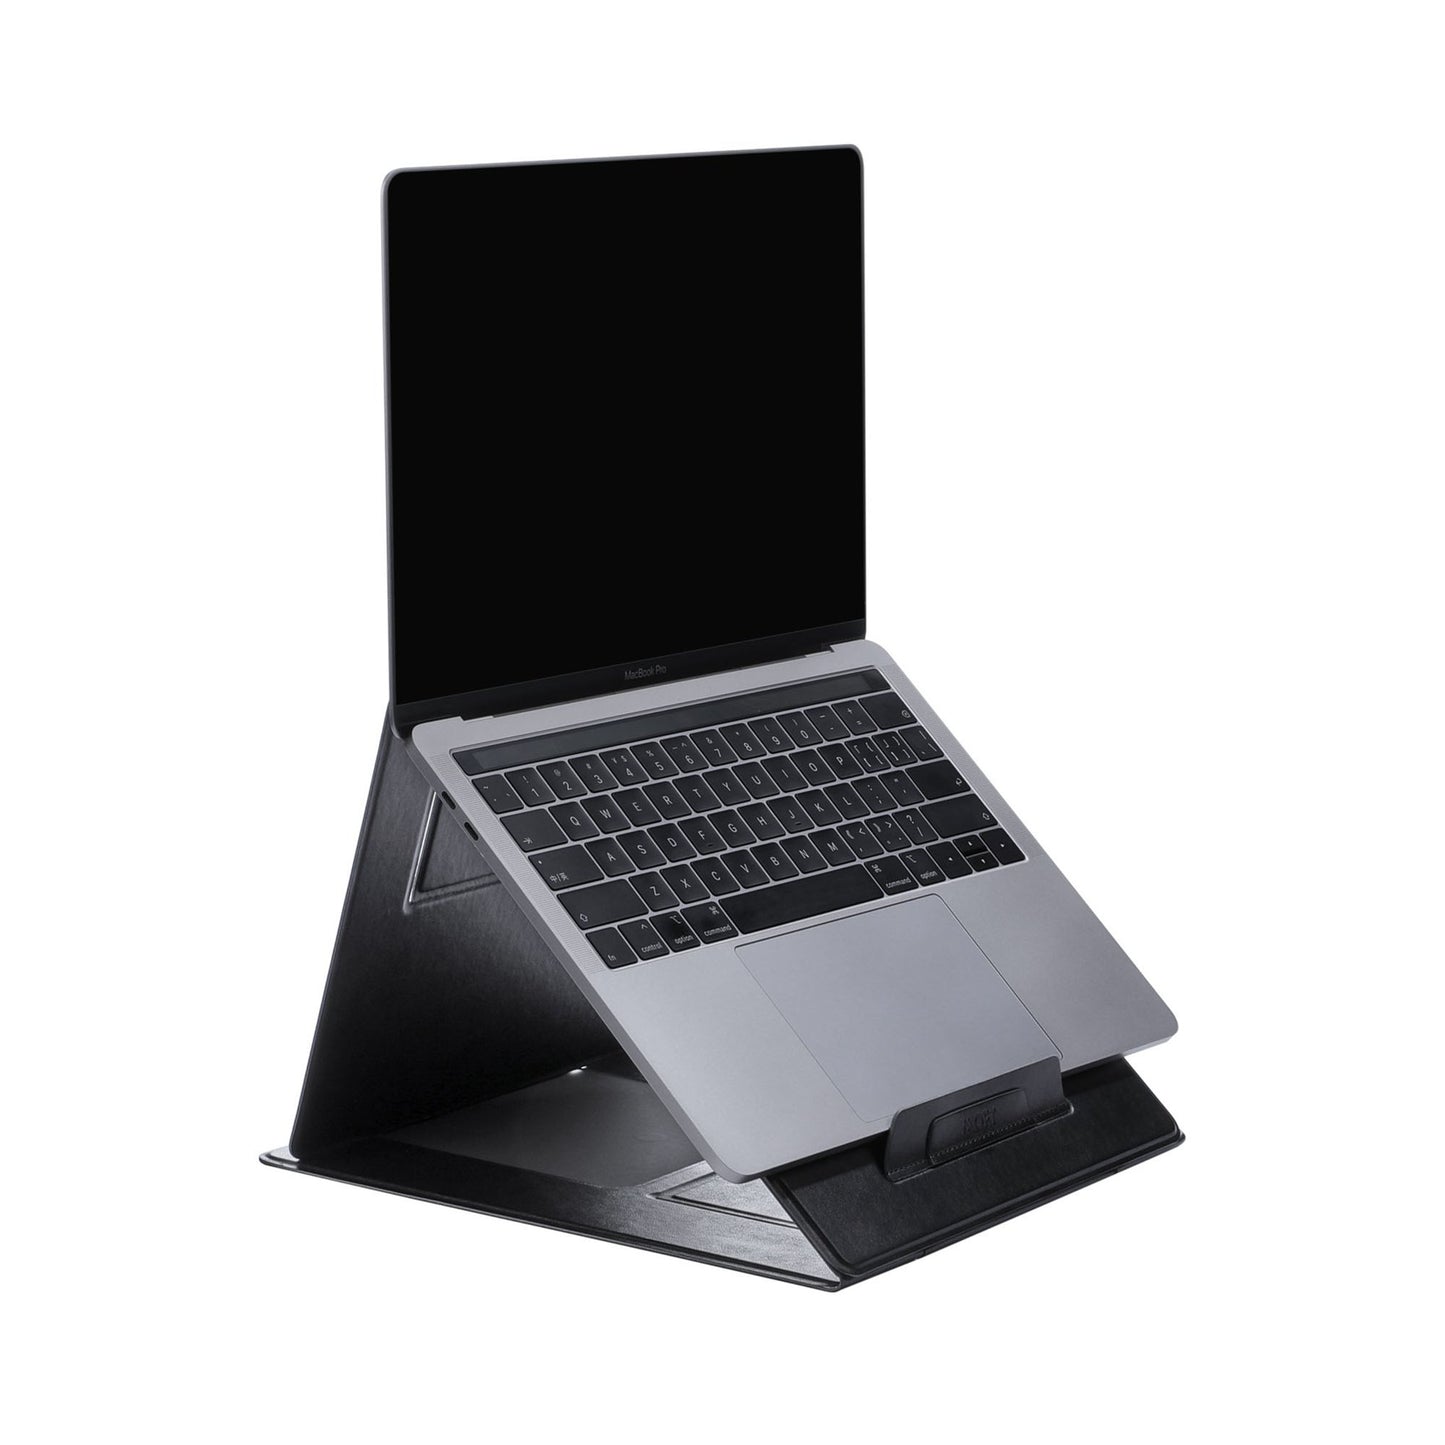 MOFT Z Foldable 5-in-1 Sit-Stand Laptop Desk - Black